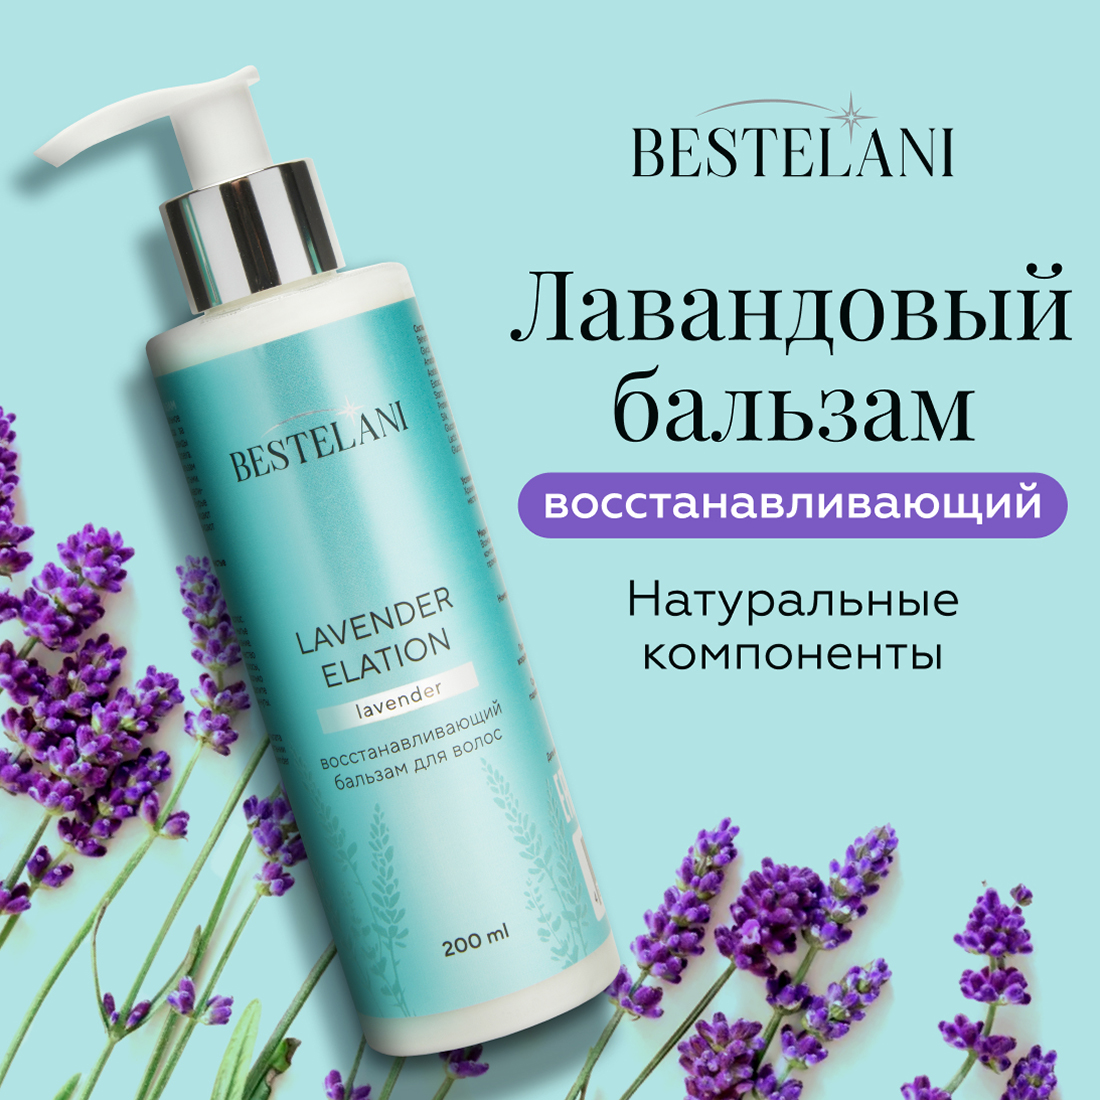 Восстанавливающий бальзам для волос Bestelani Lavender elation 200 мл бальзам для губ легенды крыма lavender 5 г